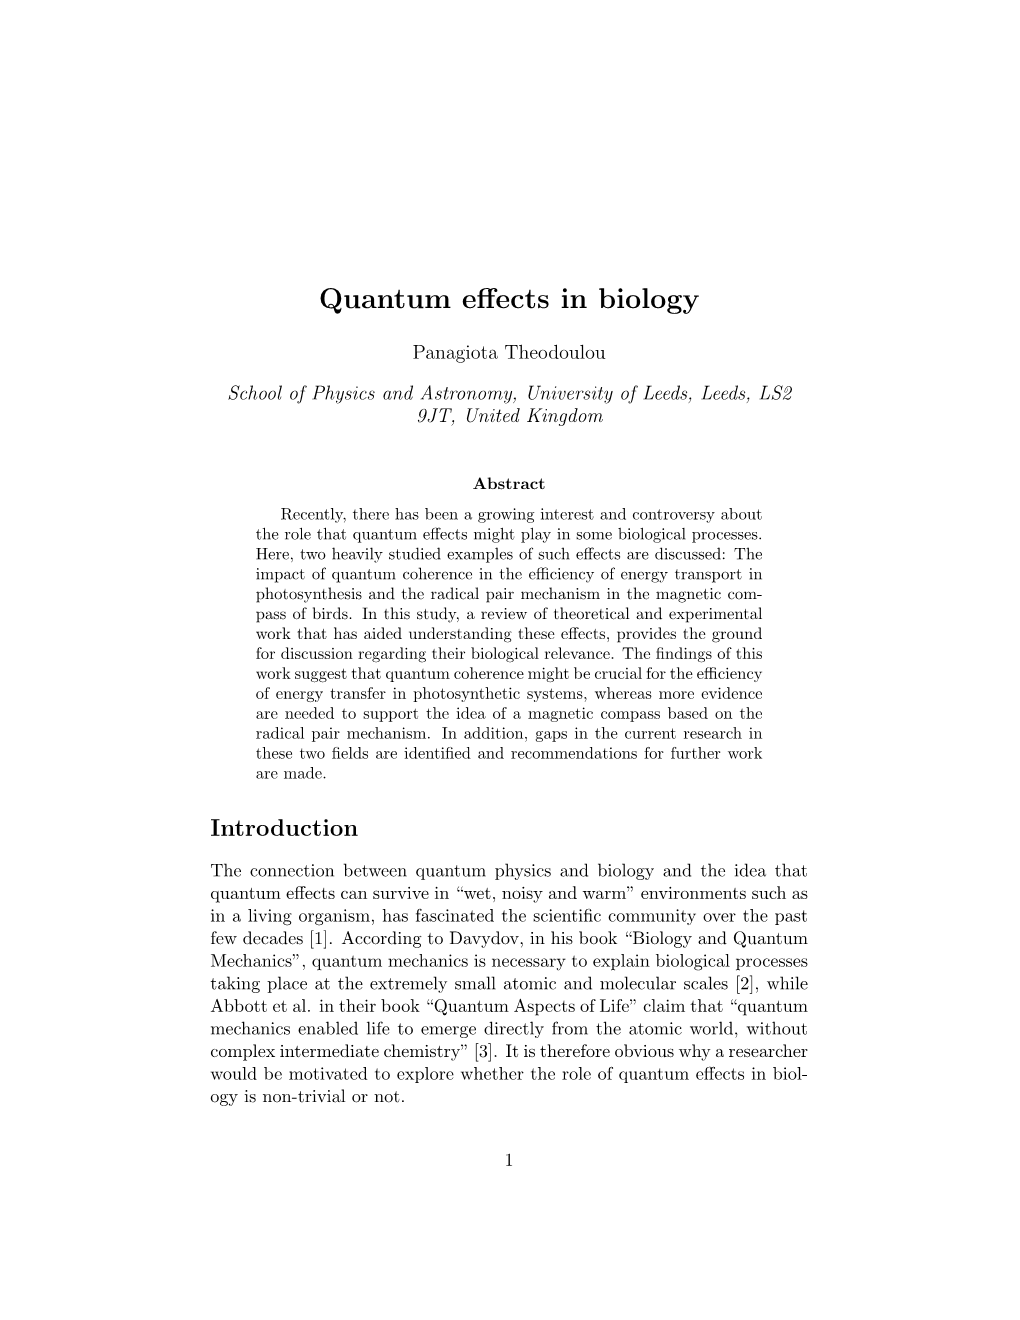 Quantum Effects in Biology